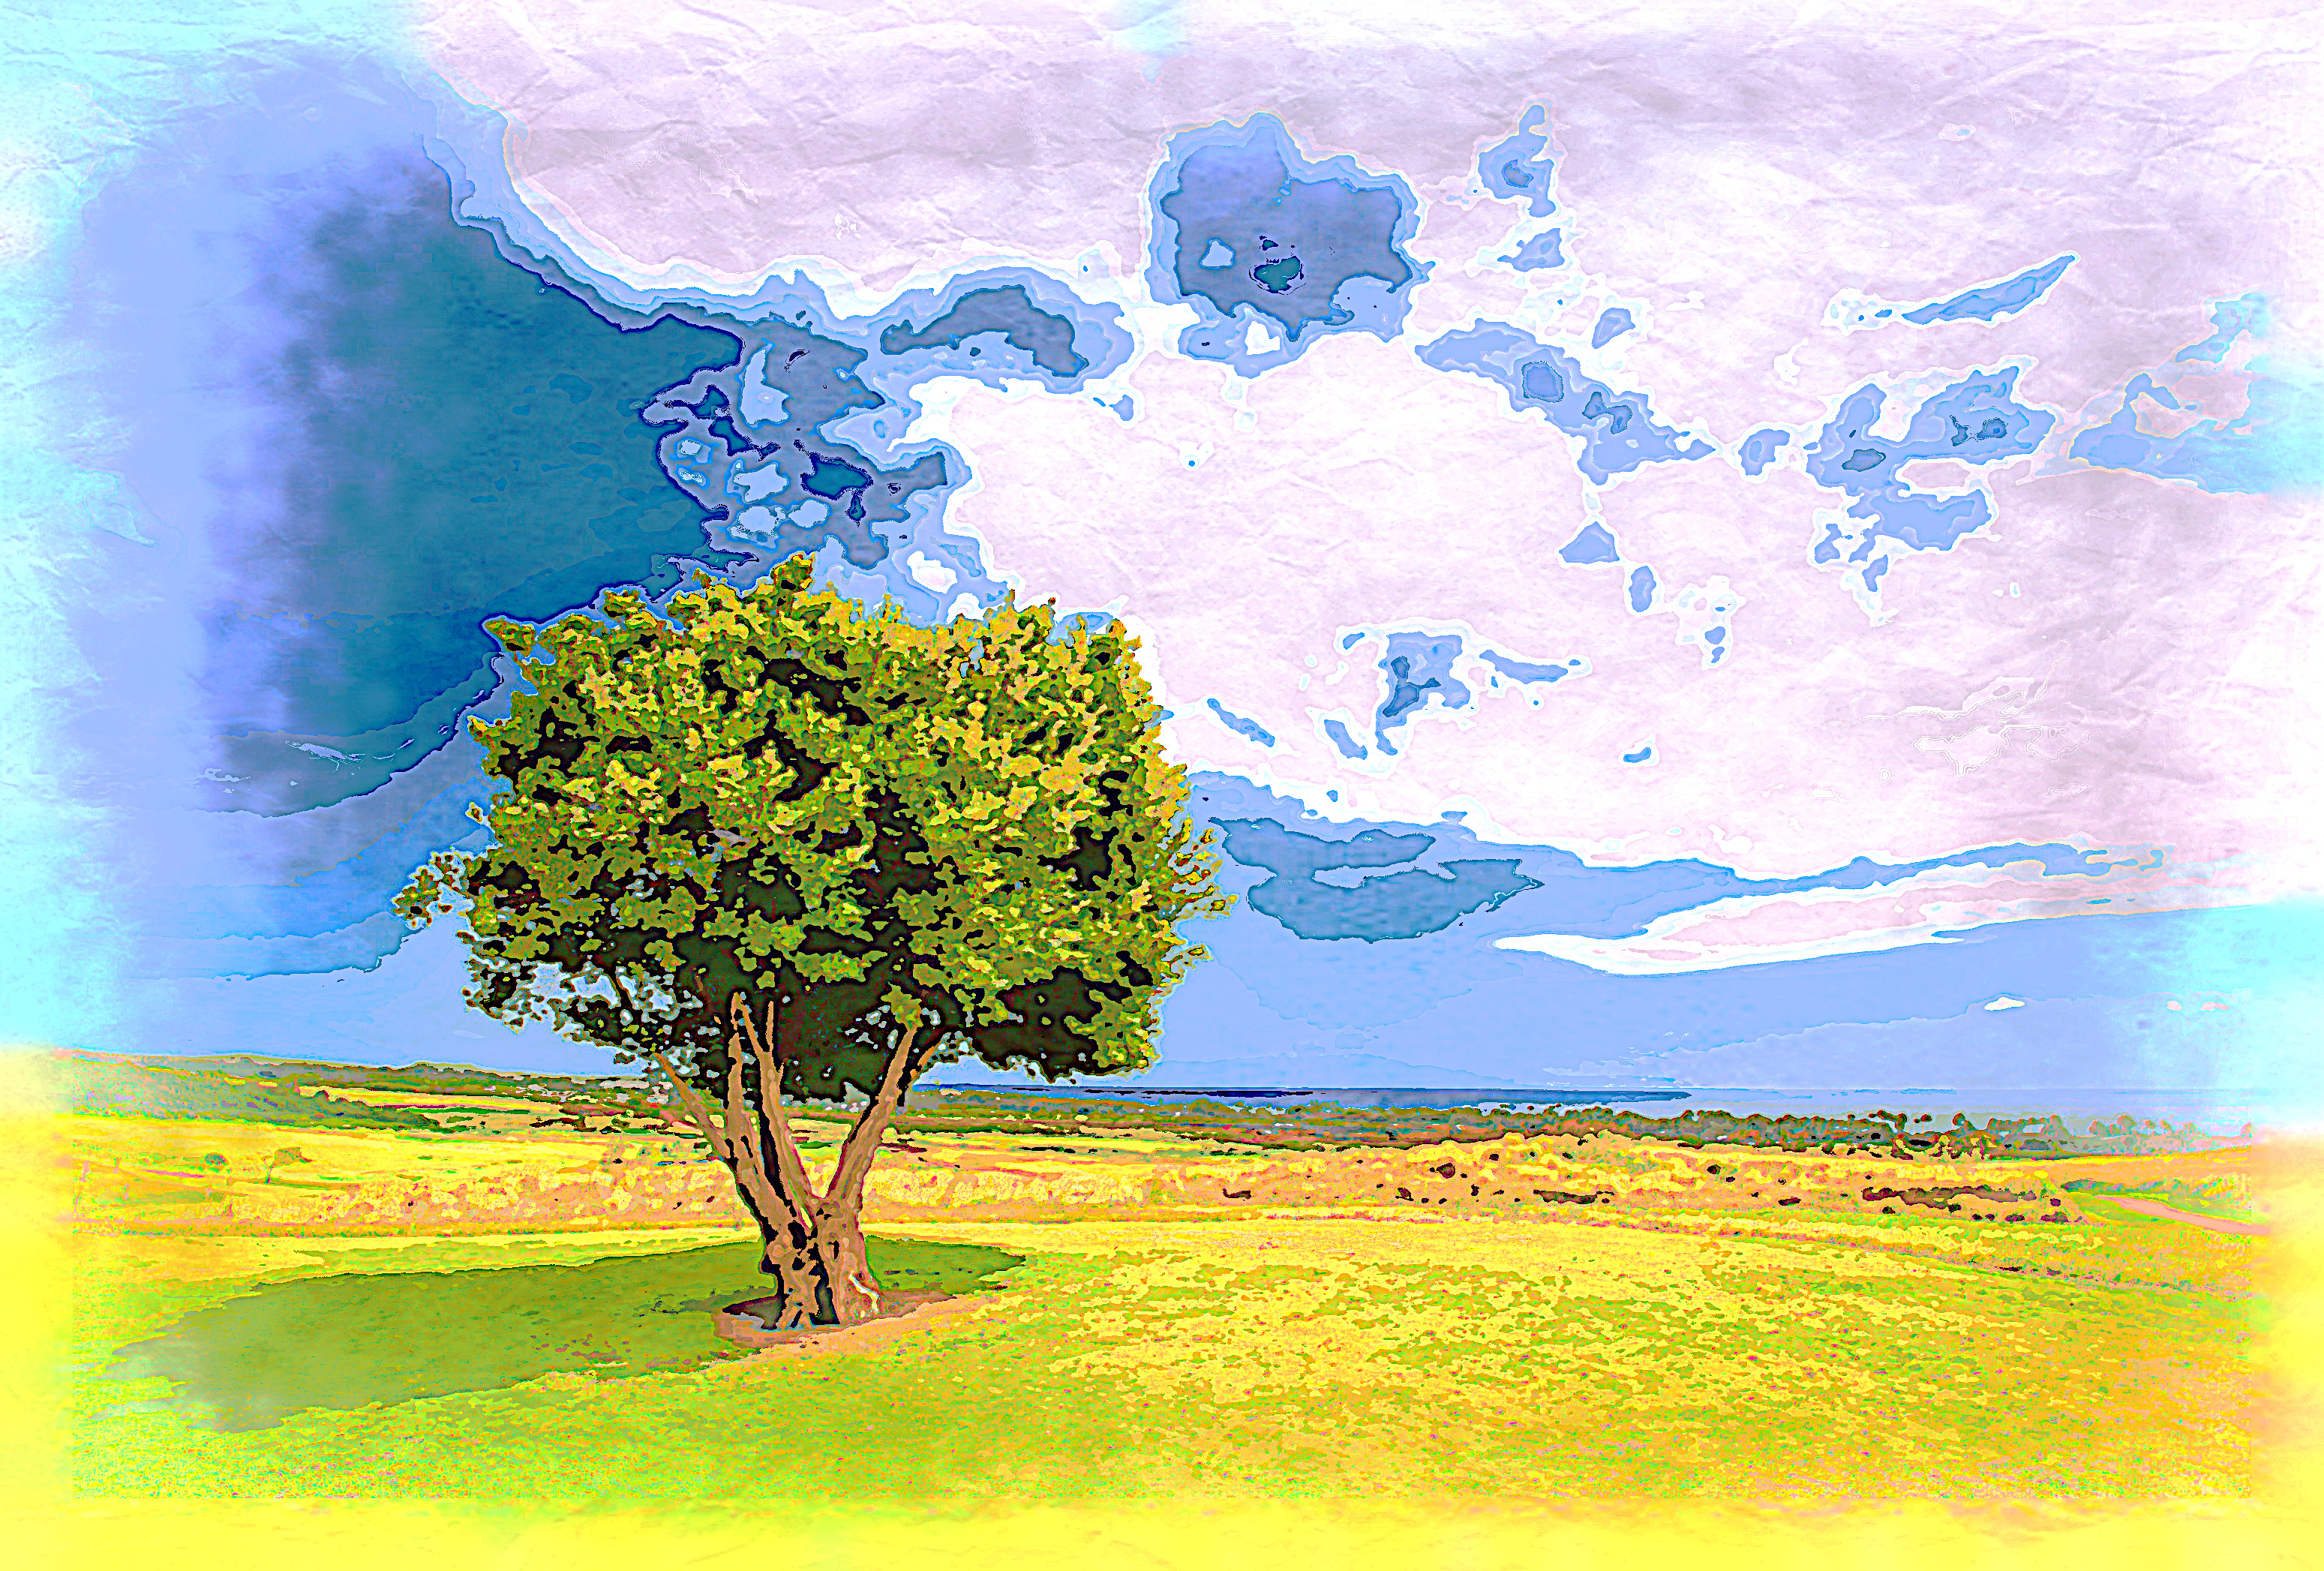 2020-04-05 17-21-31 jeff-king-bJHWJeiHfHc-unsplash as a digital aquarel, using18 colours, source landscape, look contrast plus.jpg